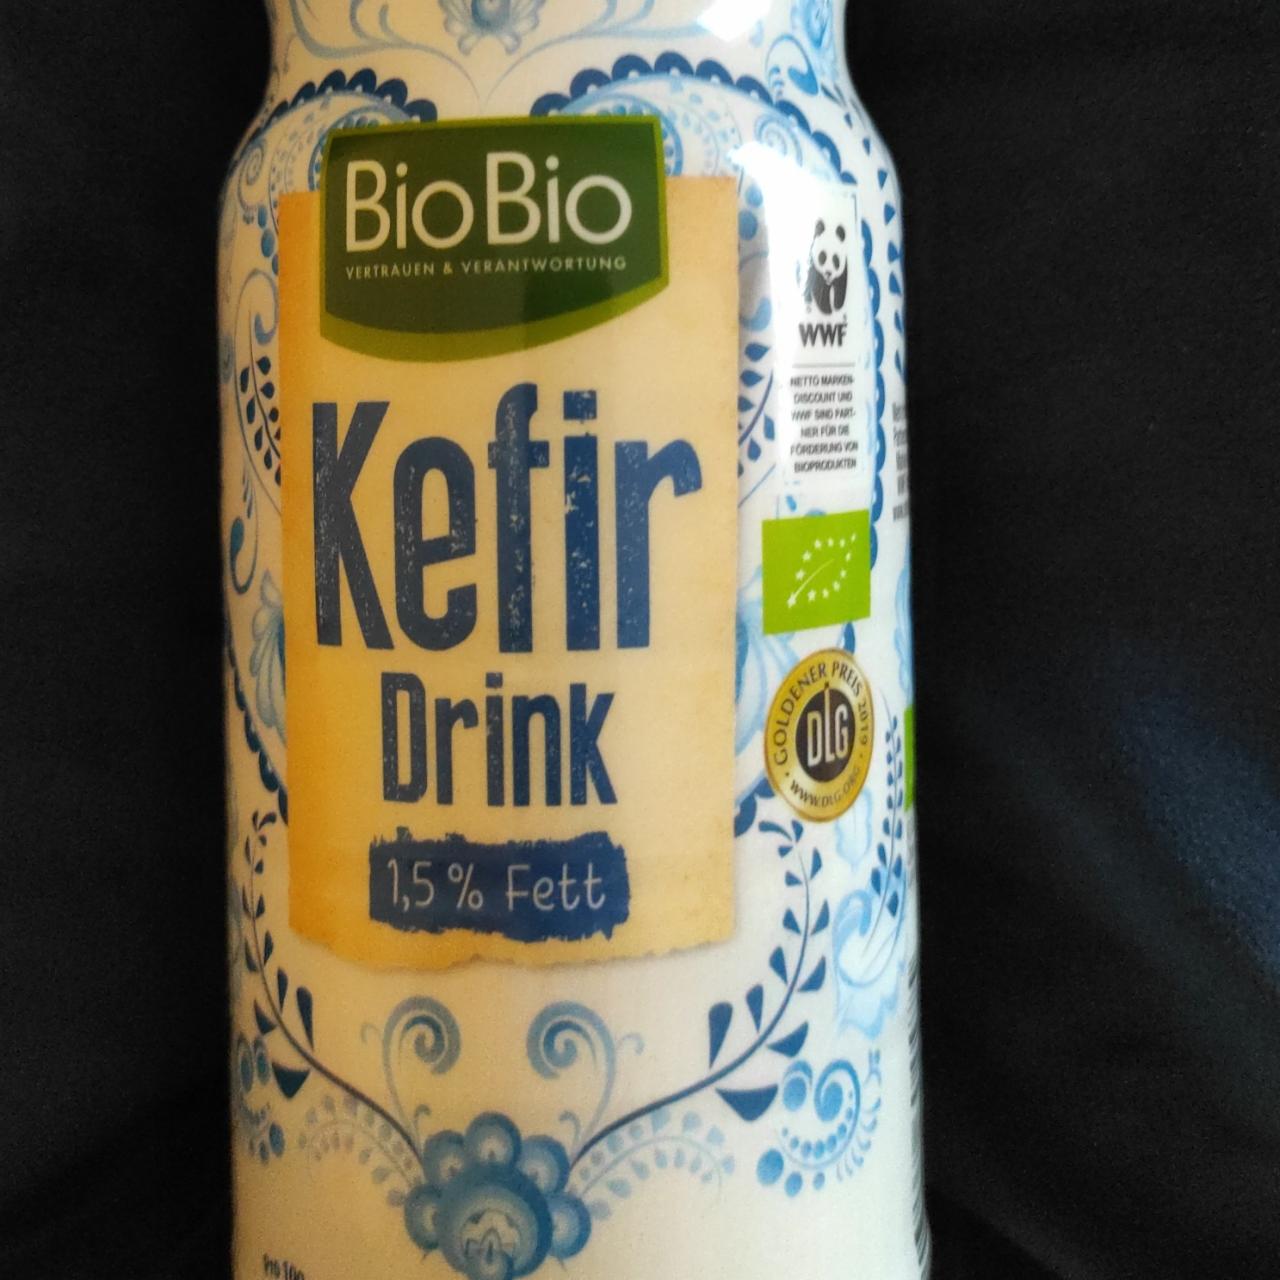 Fotografie - Kefir drink 1,5% Fett BioBio